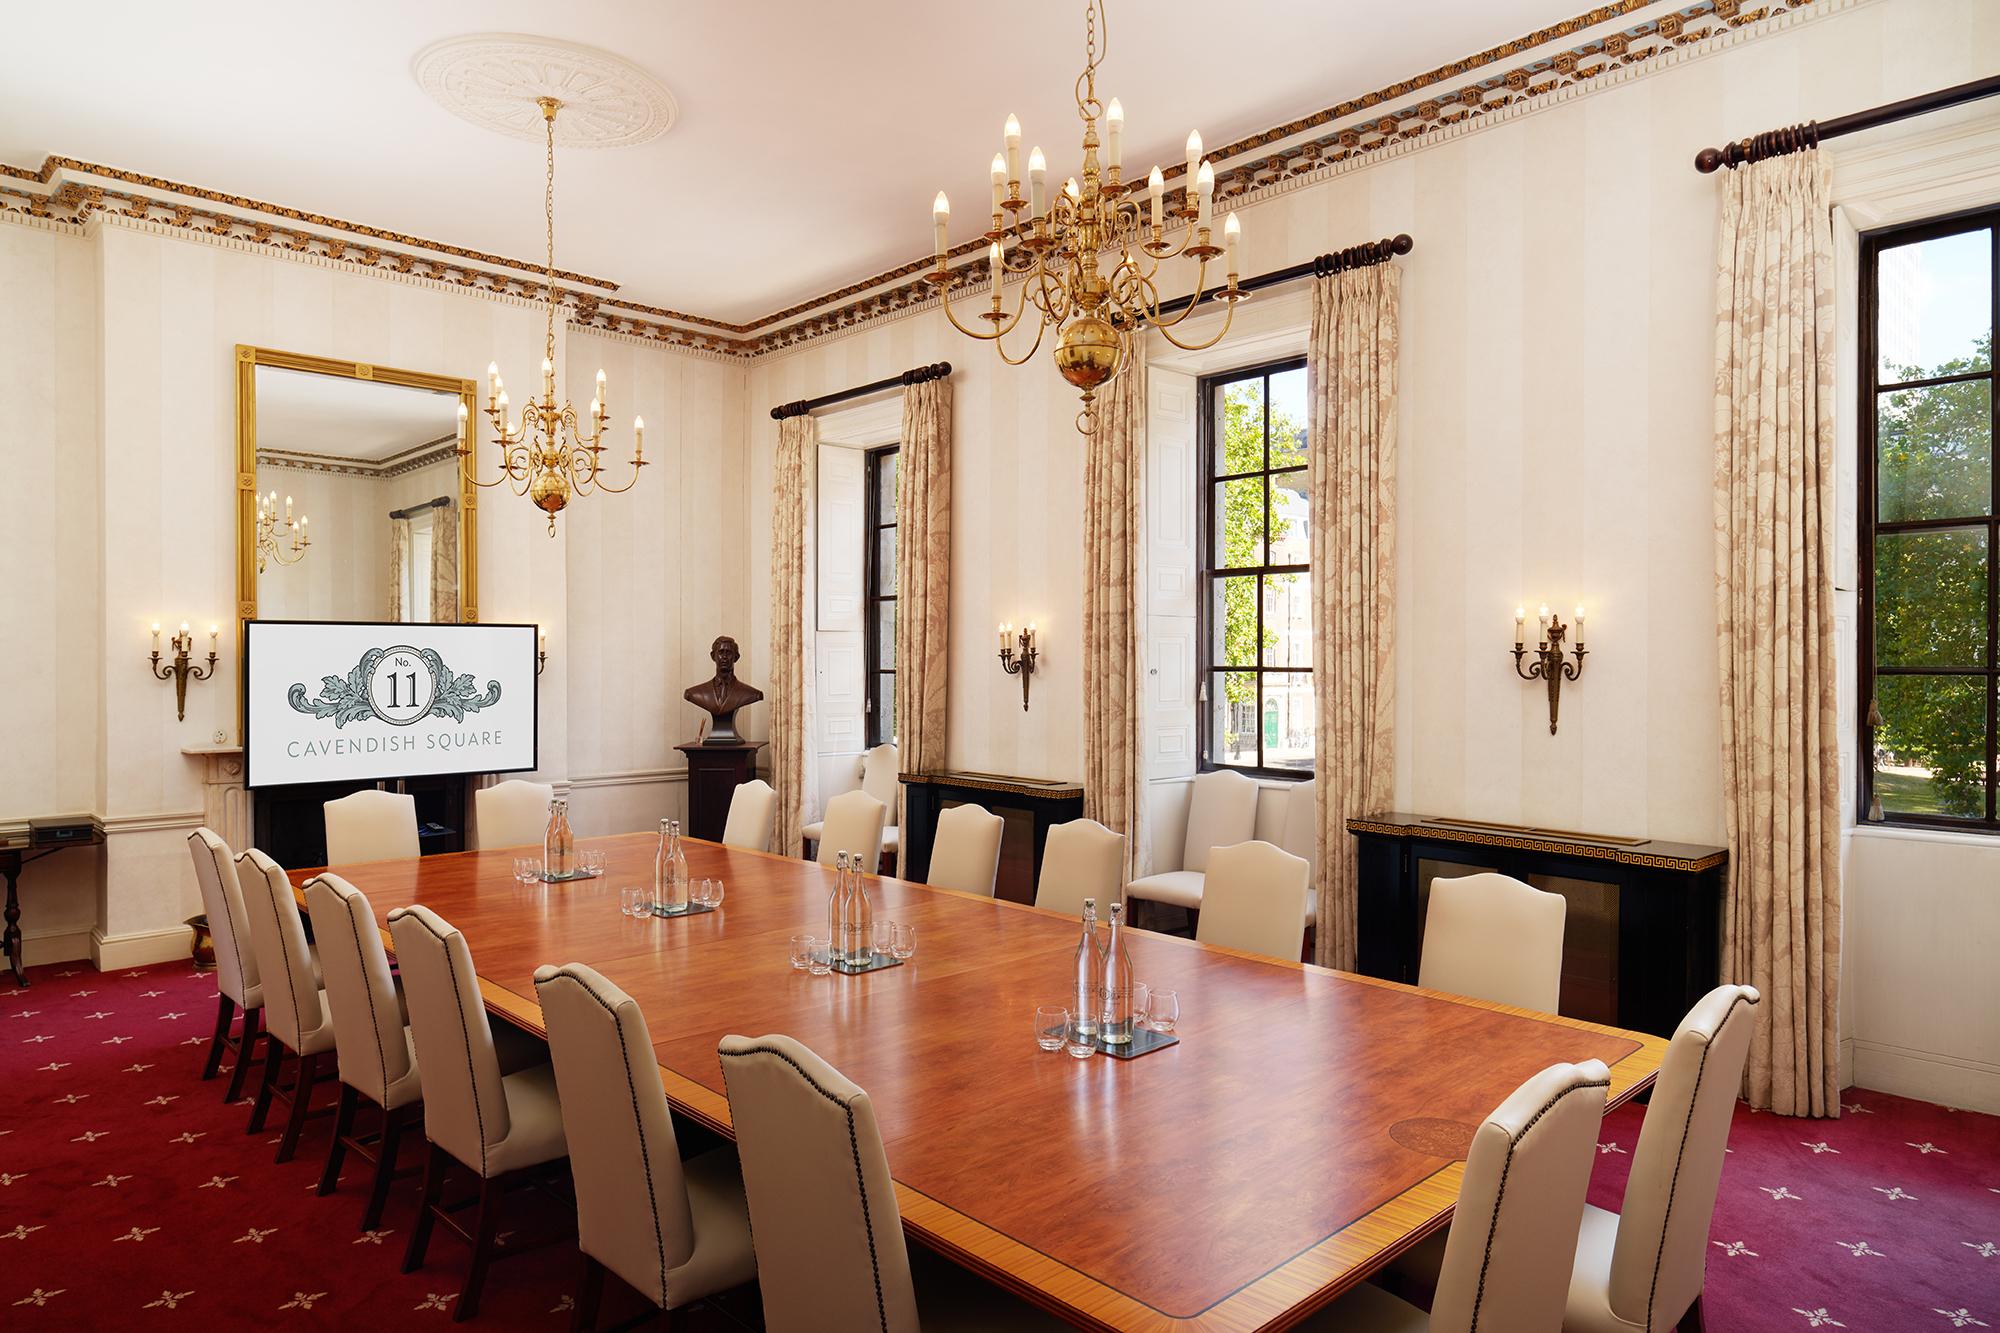 Presidents Room, No.11 Cavendish Square photo #2